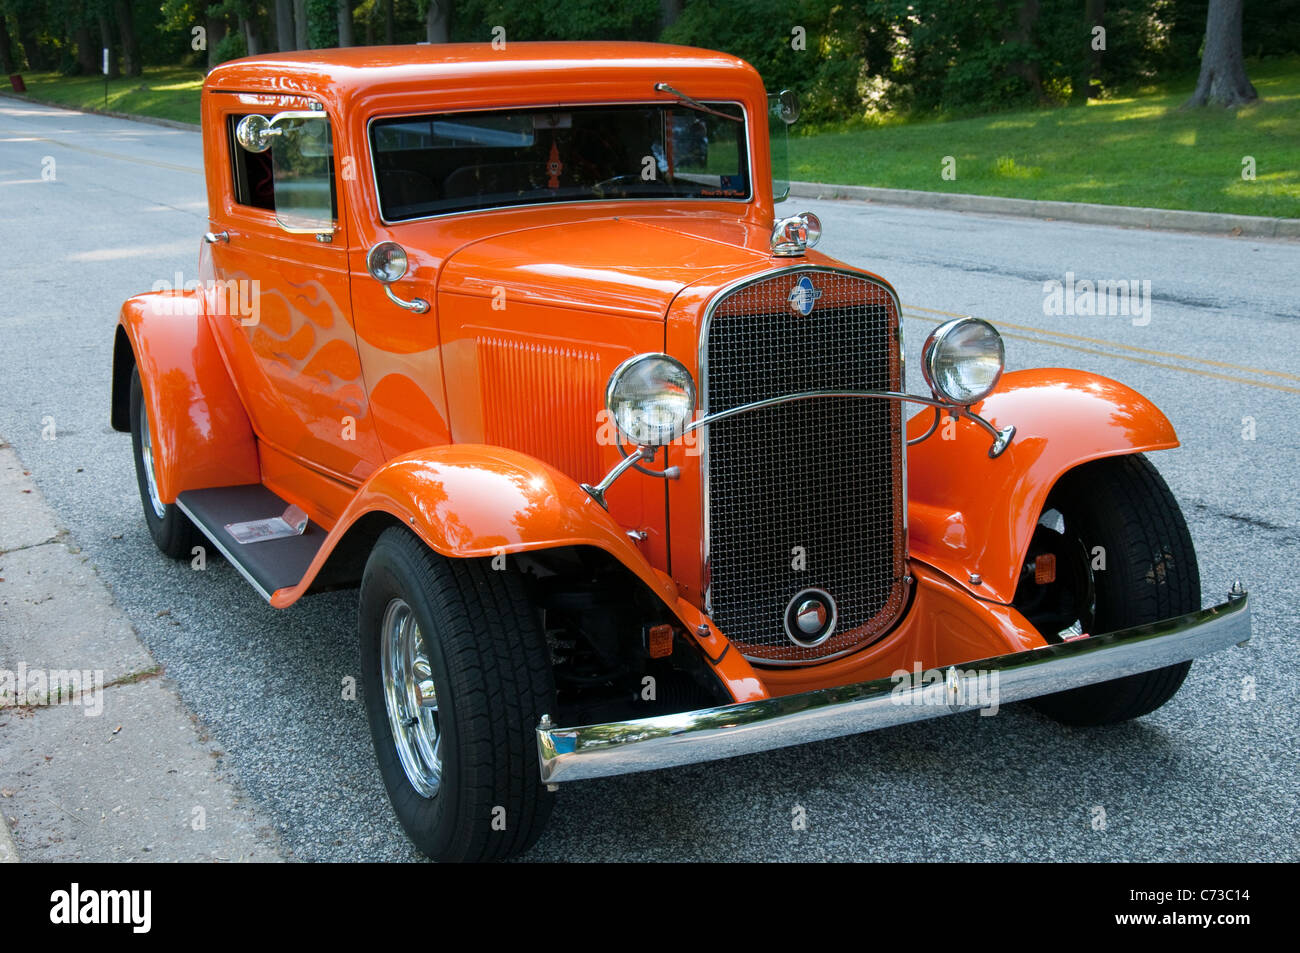 An orange vintage Chevrolet car in Baltimore Maryland USA Stock Photo